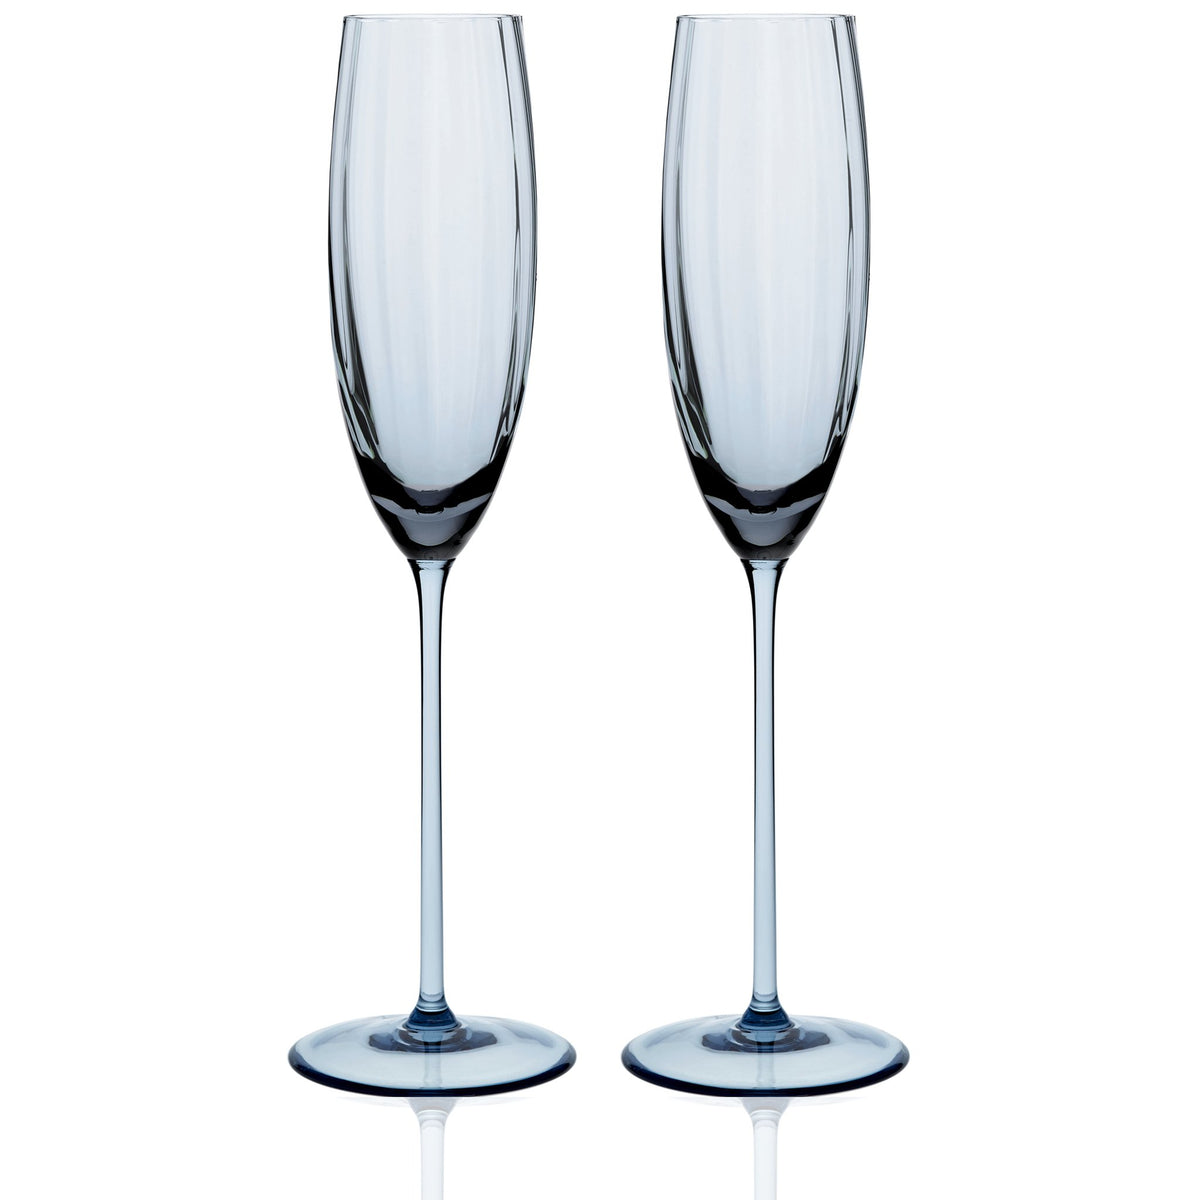 Quinn Champagne Flute Glasses, Set of 2